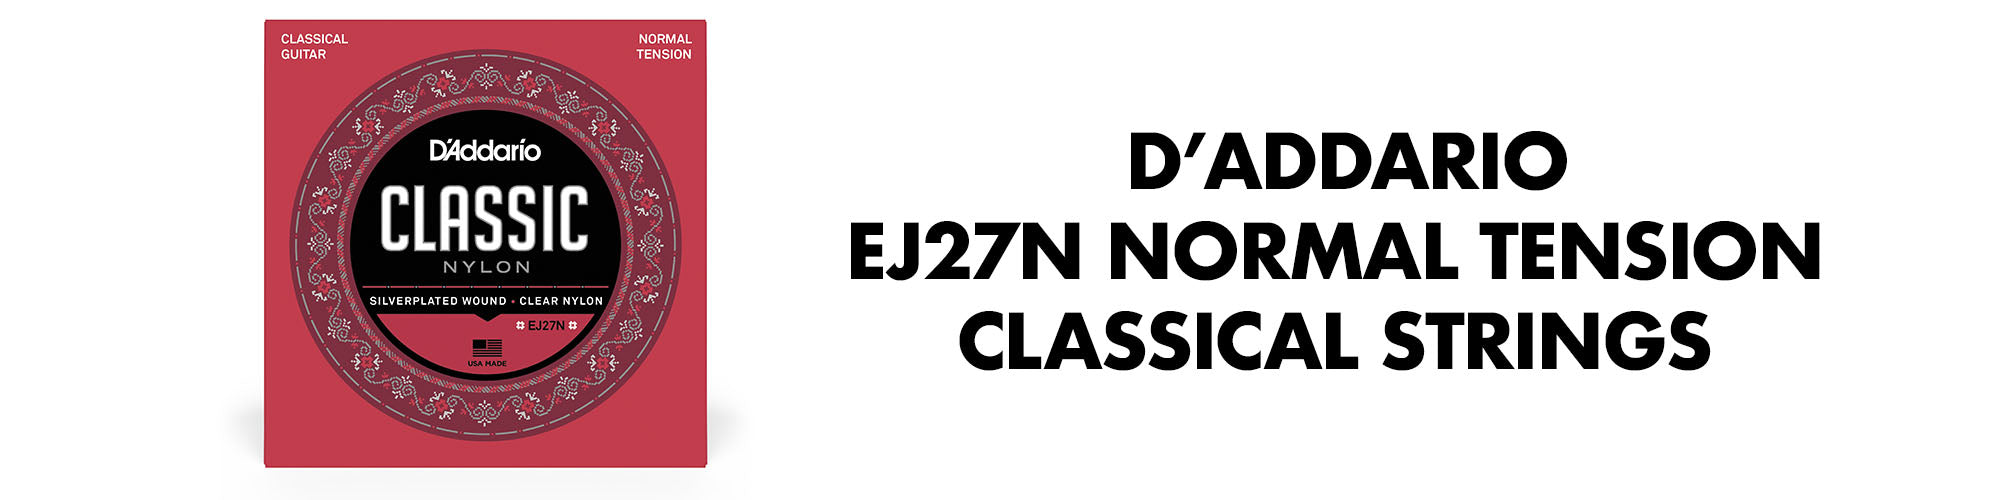 D'Addario EJ27N Student Classical Normal Tension Full Size Guitar Strings